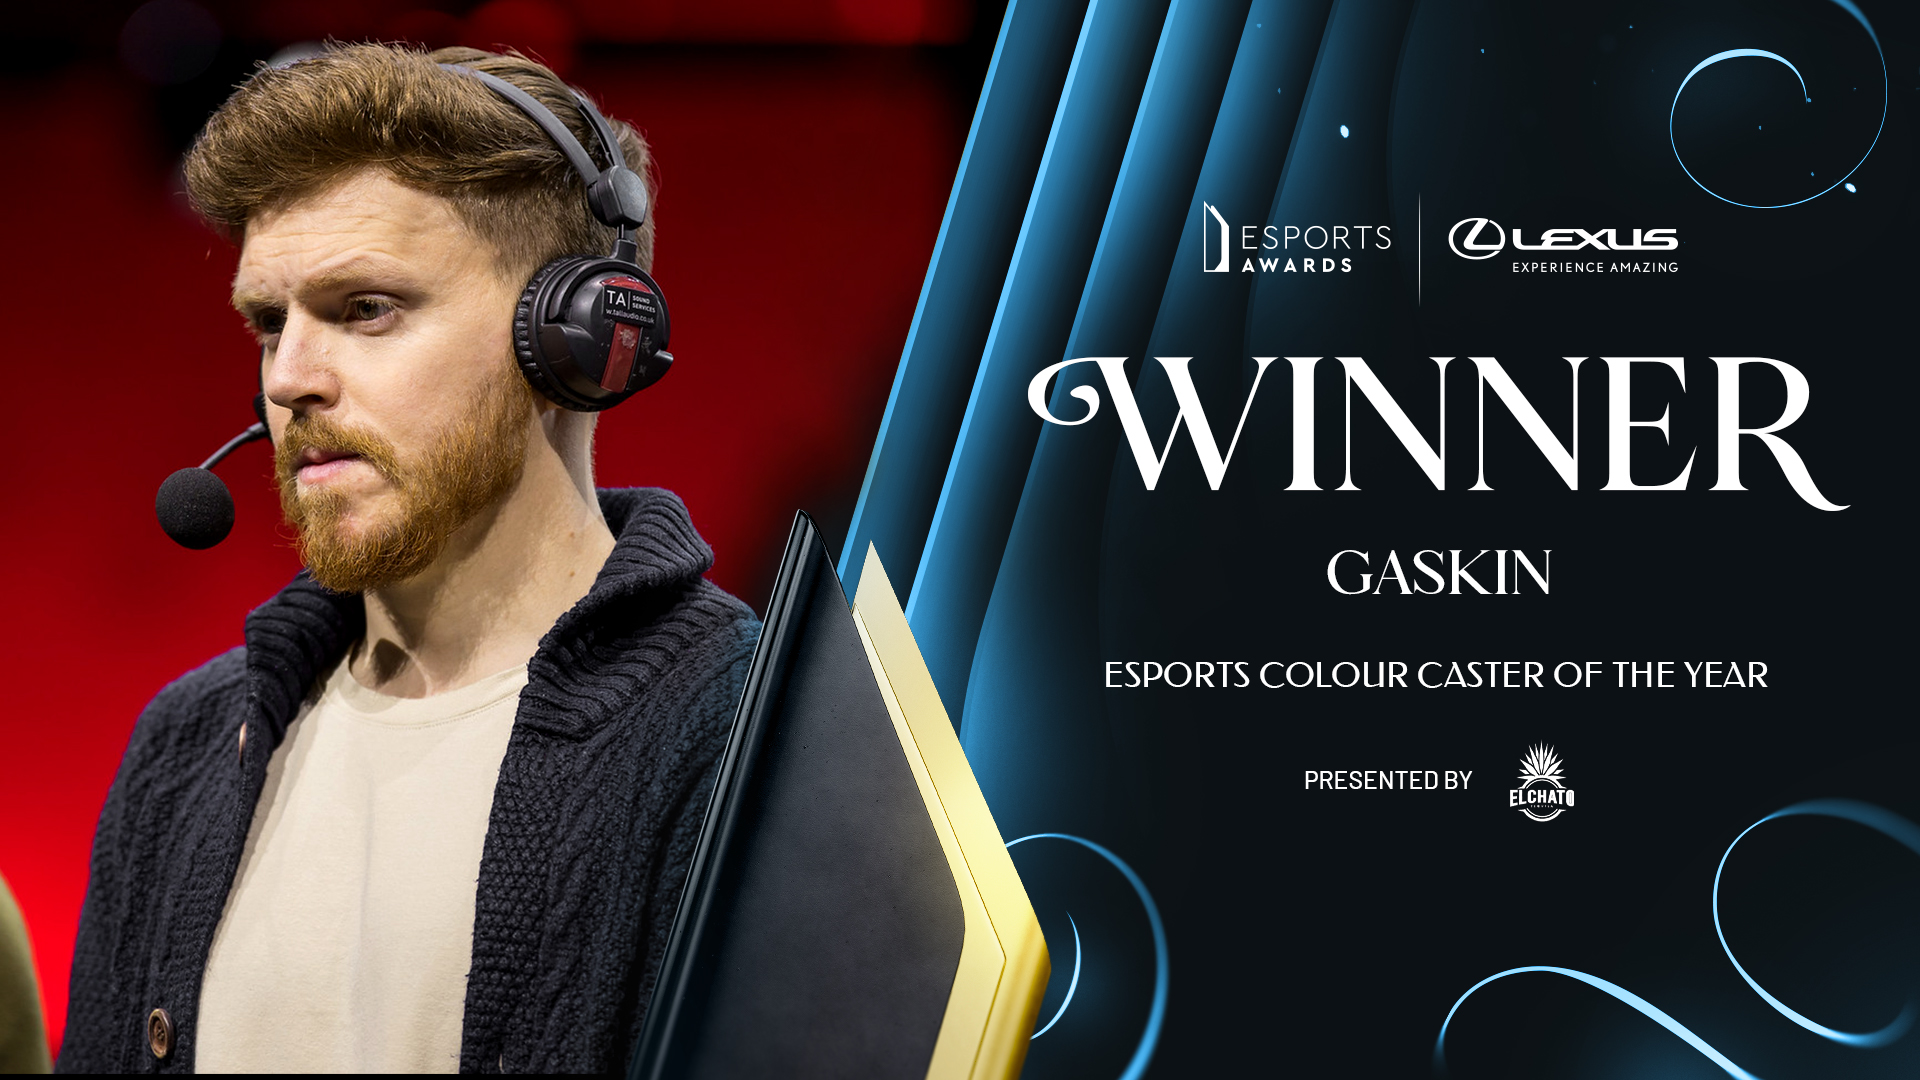 Esports Colour Caster of the Year: Dan “Gaskin” Gaskin